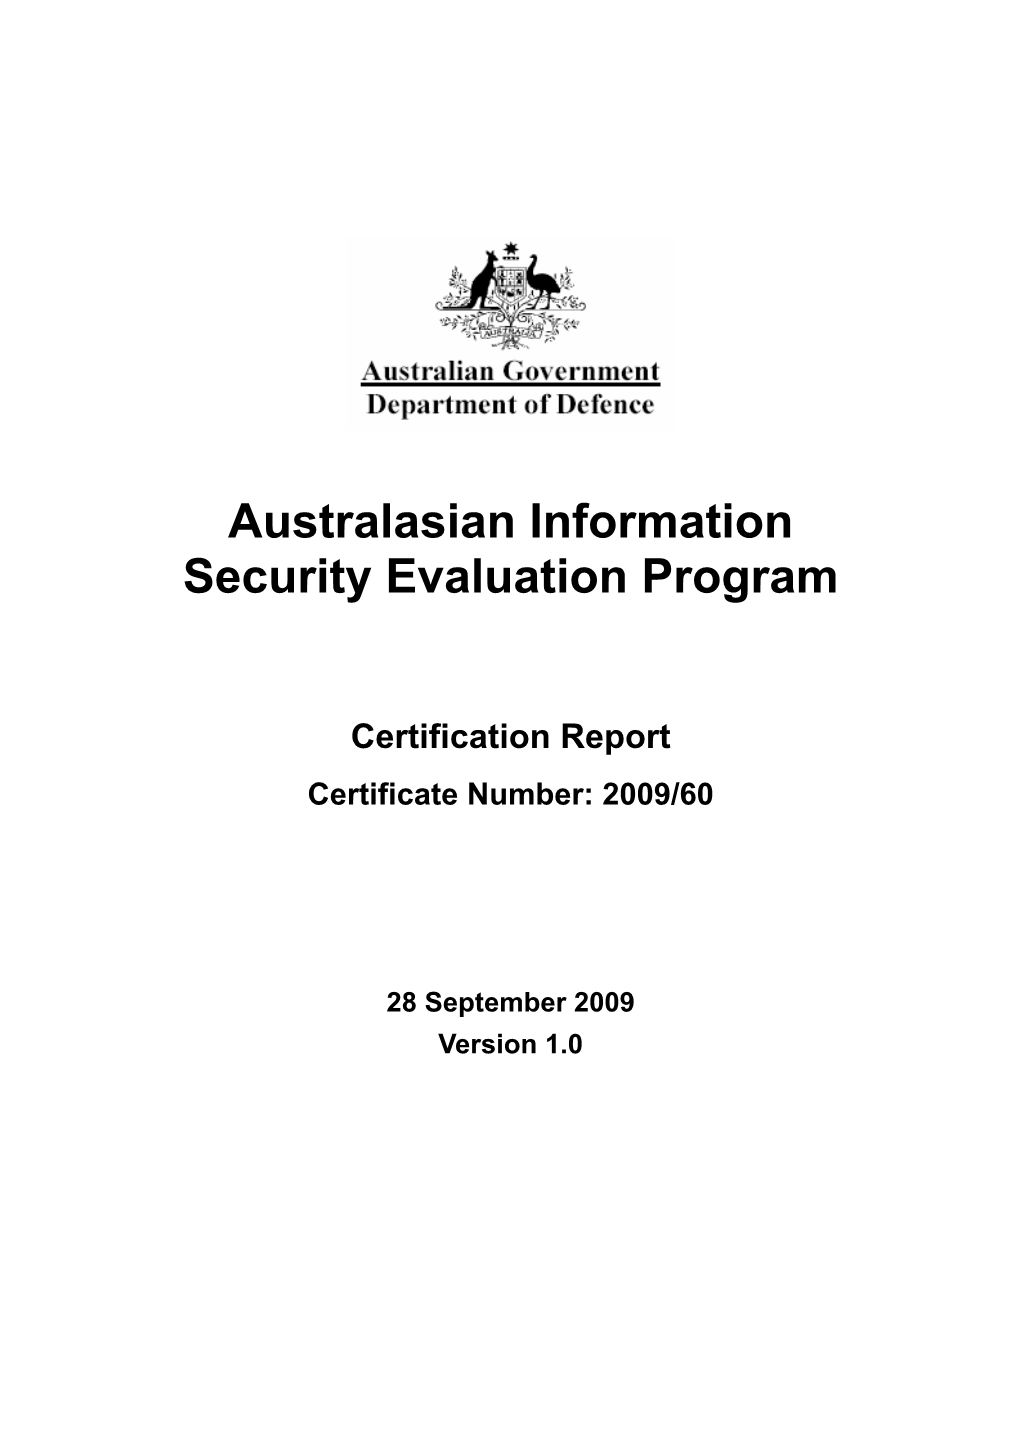 Australasian Information Security Evaluation Program